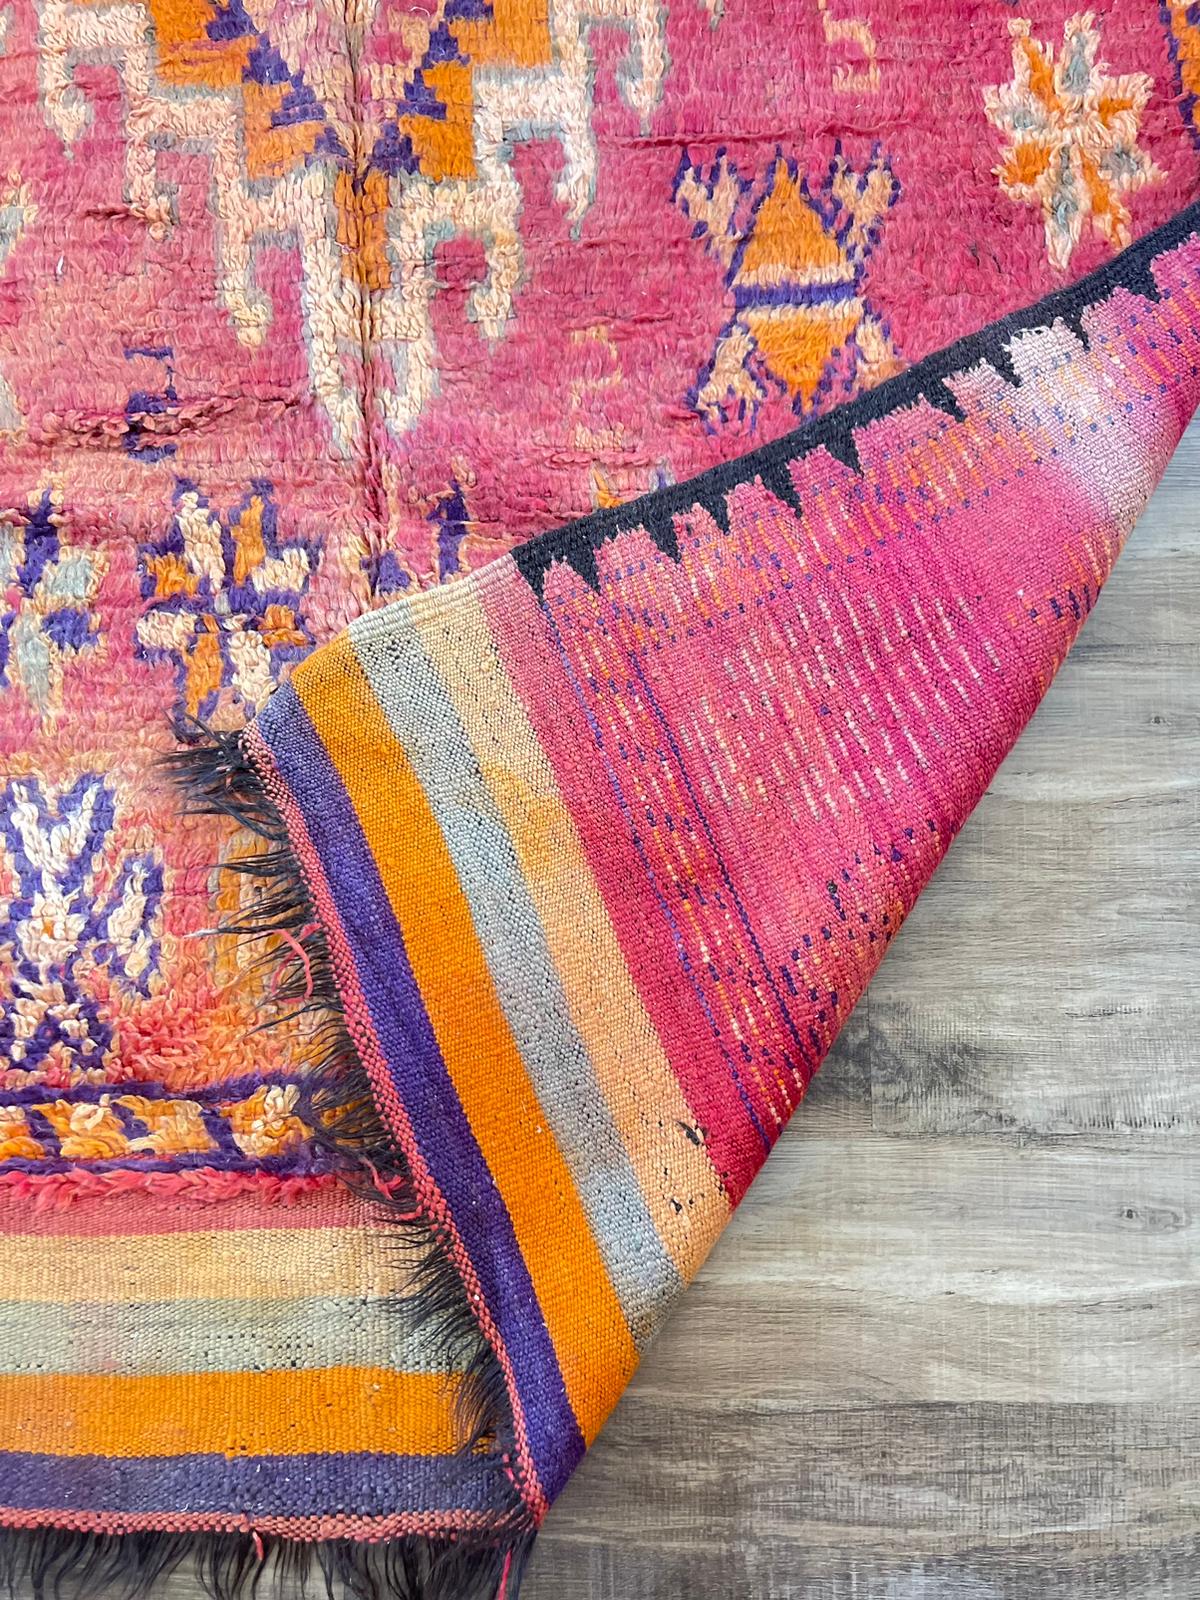 Warm vibrant red vintage Moroccan rug with orange and purple symbols